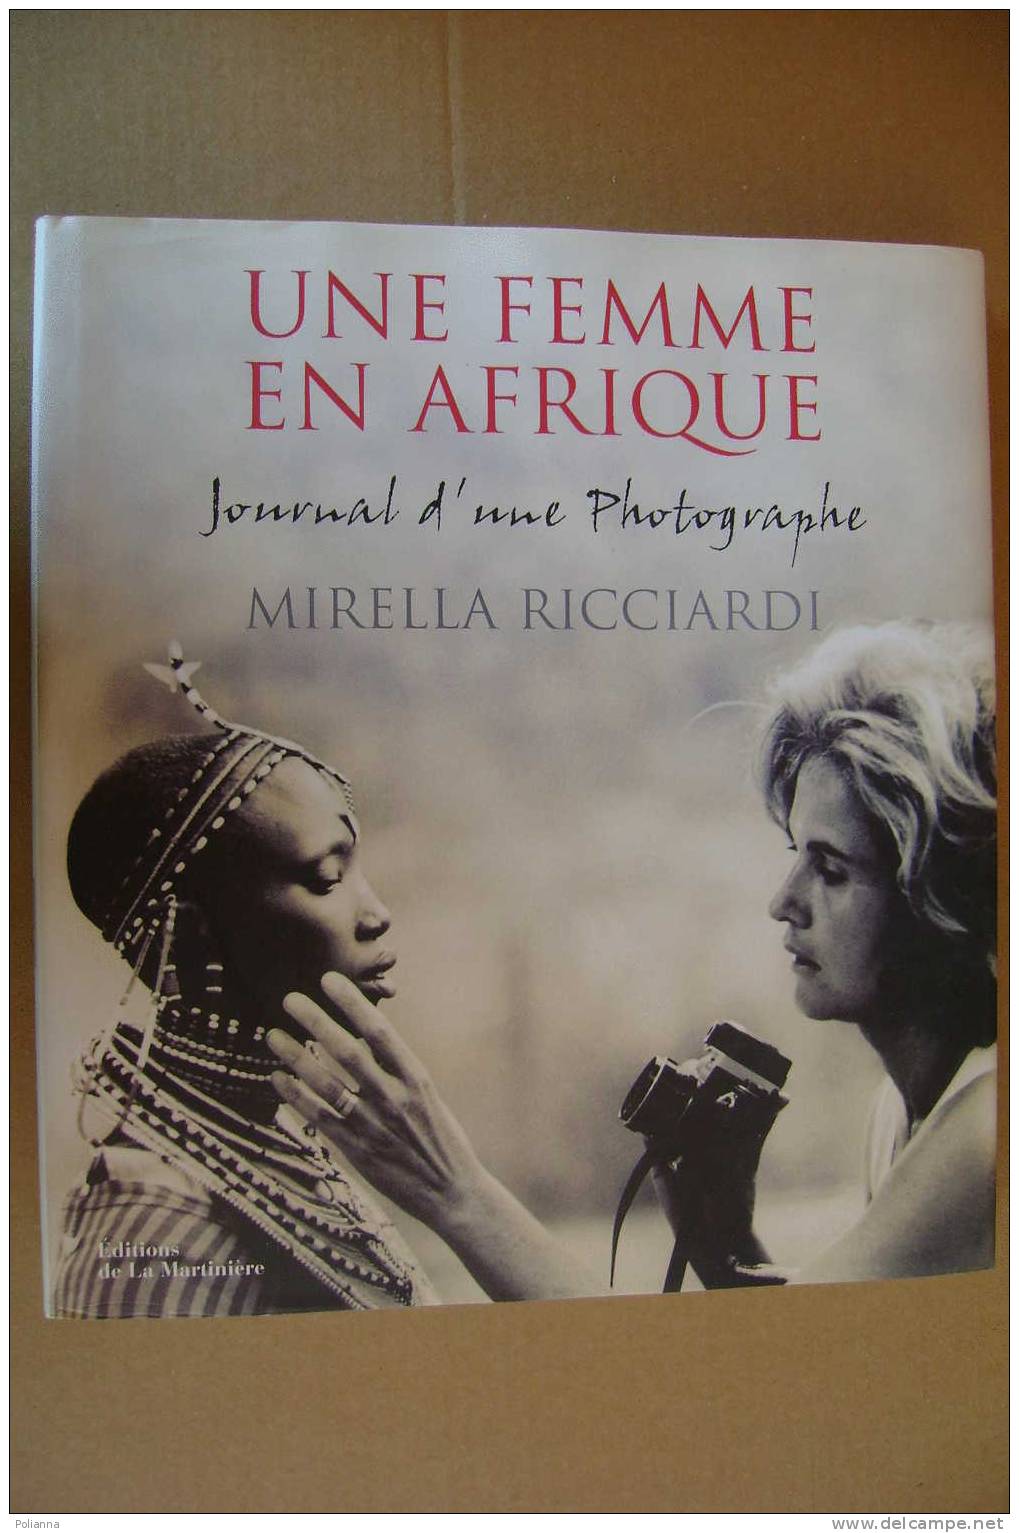 PAL/1 UNE FEMME EN AFRIQUE - MIRELLA RICCIARDI La Martiniere 2001 / Fotografia/DONNA - Photo